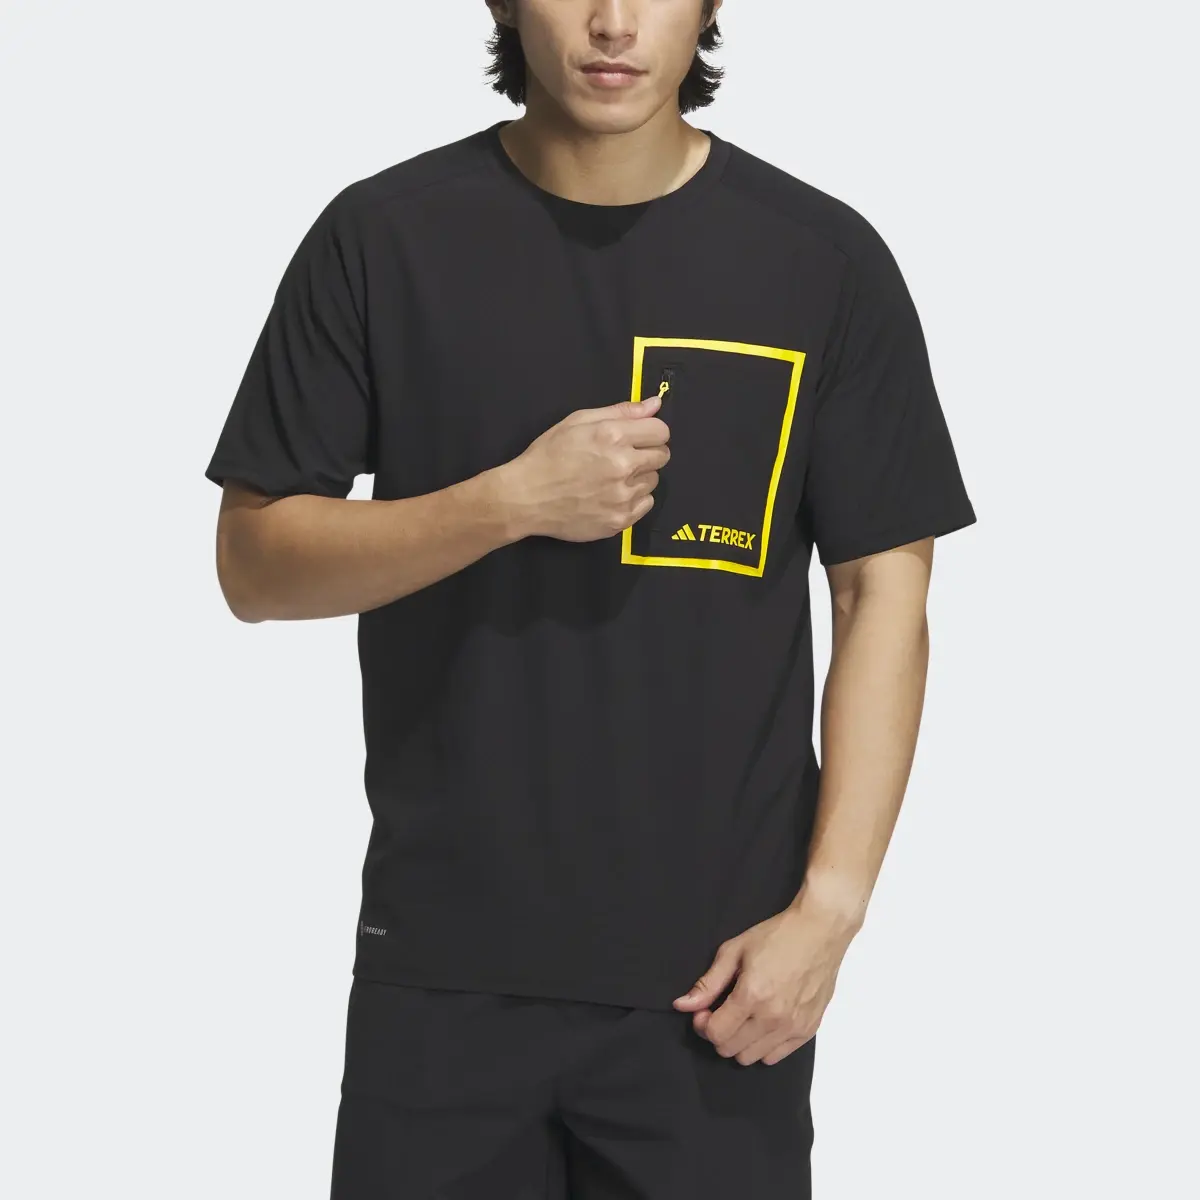 Adidas T-shirt National Geographic. 1